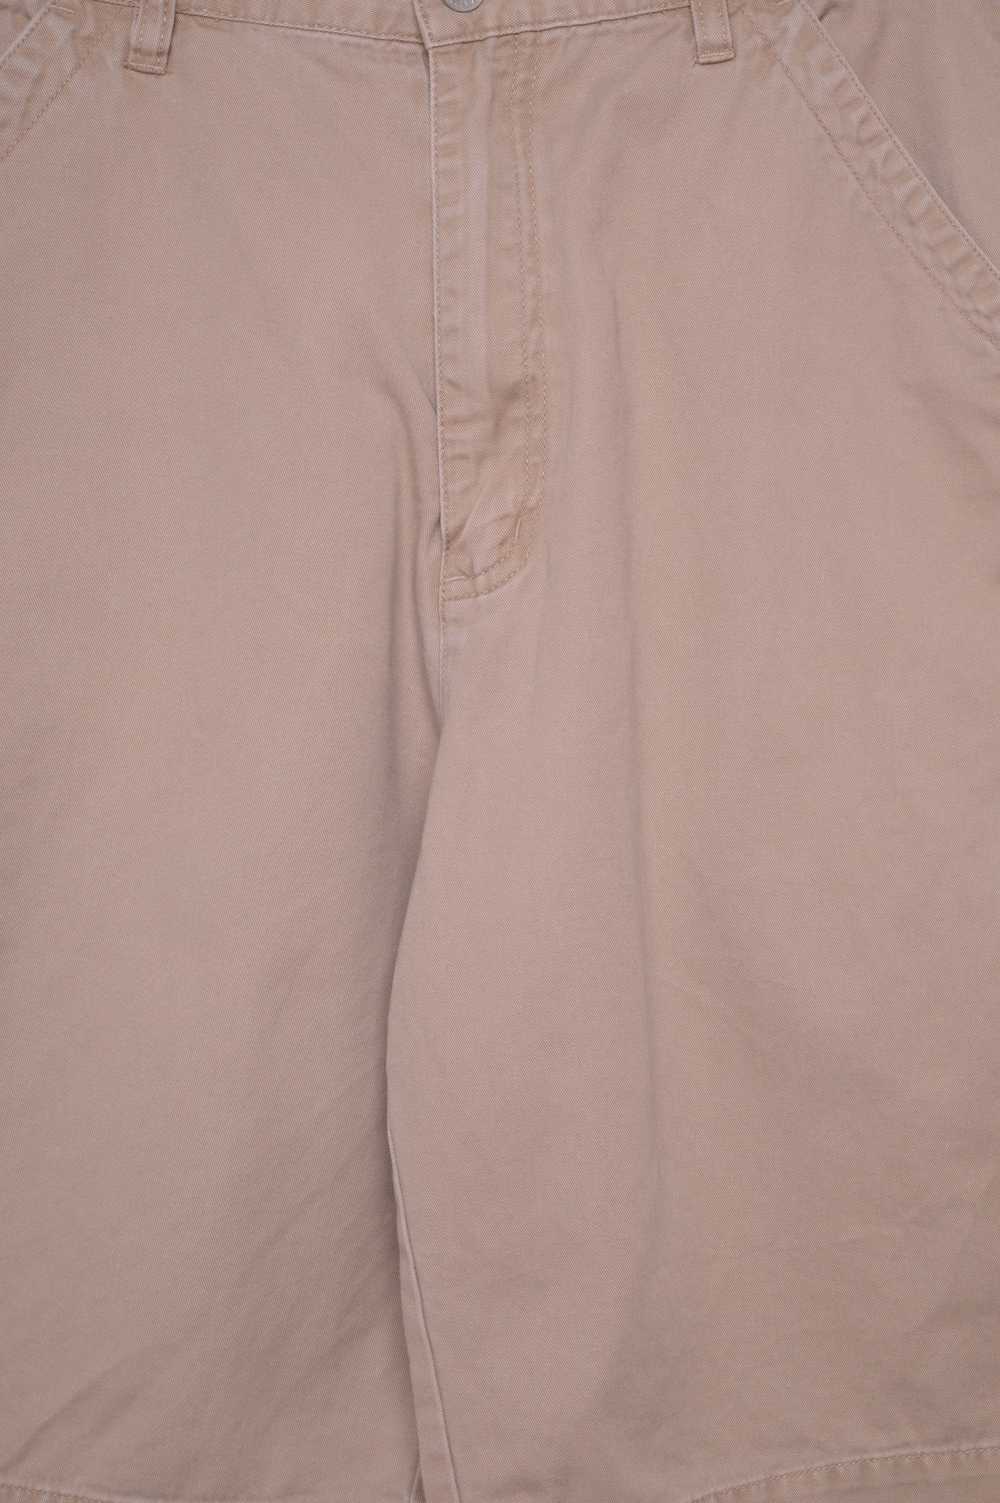 1980s DKNY Carpenter Shorts - image 3